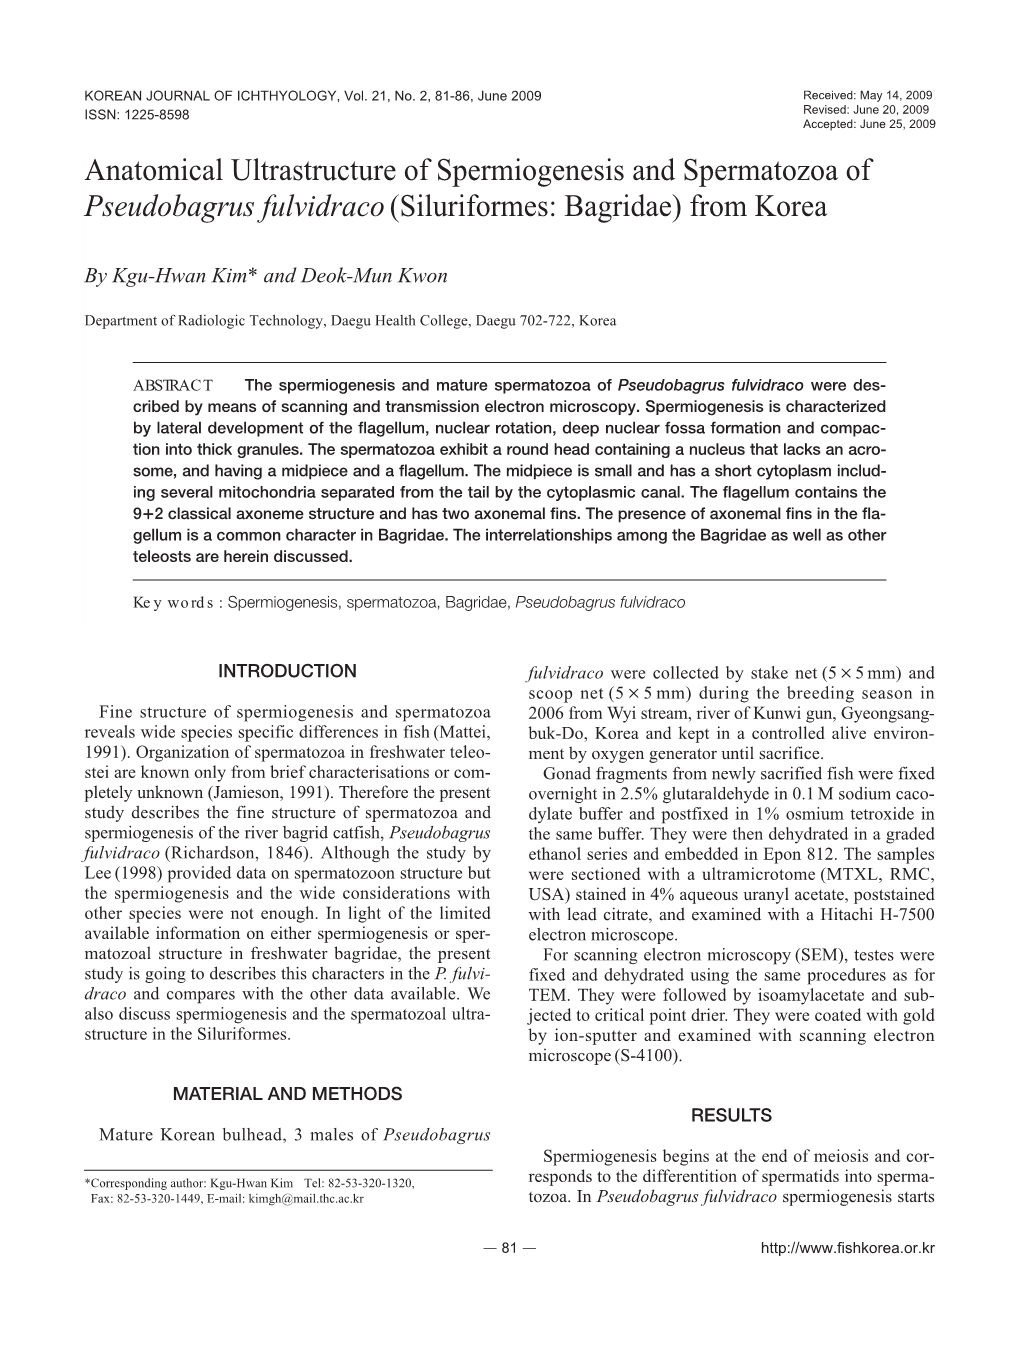 Anatomical Ultrastructure of Spermiogenesis and Spermatozoa of Pseudobagrus Fulvidraco (Siluriformes: Bagridae) from Korea